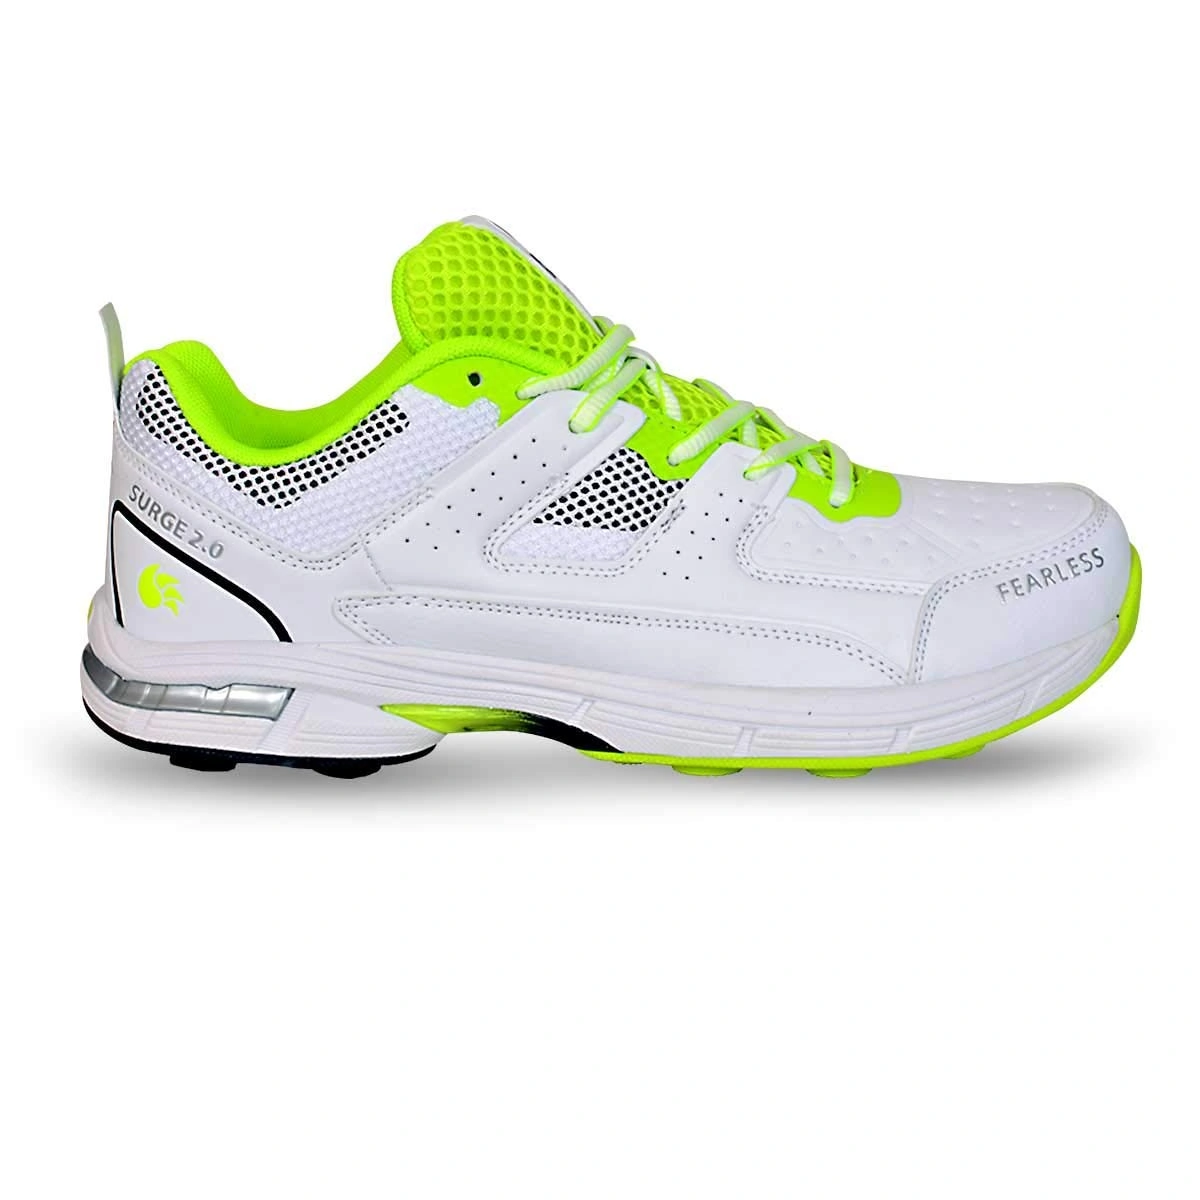 DSC Surge 2.0 All Rounder Cricket Shoes for Men-WHITE-FLOROSENT-YELLOW-1-1